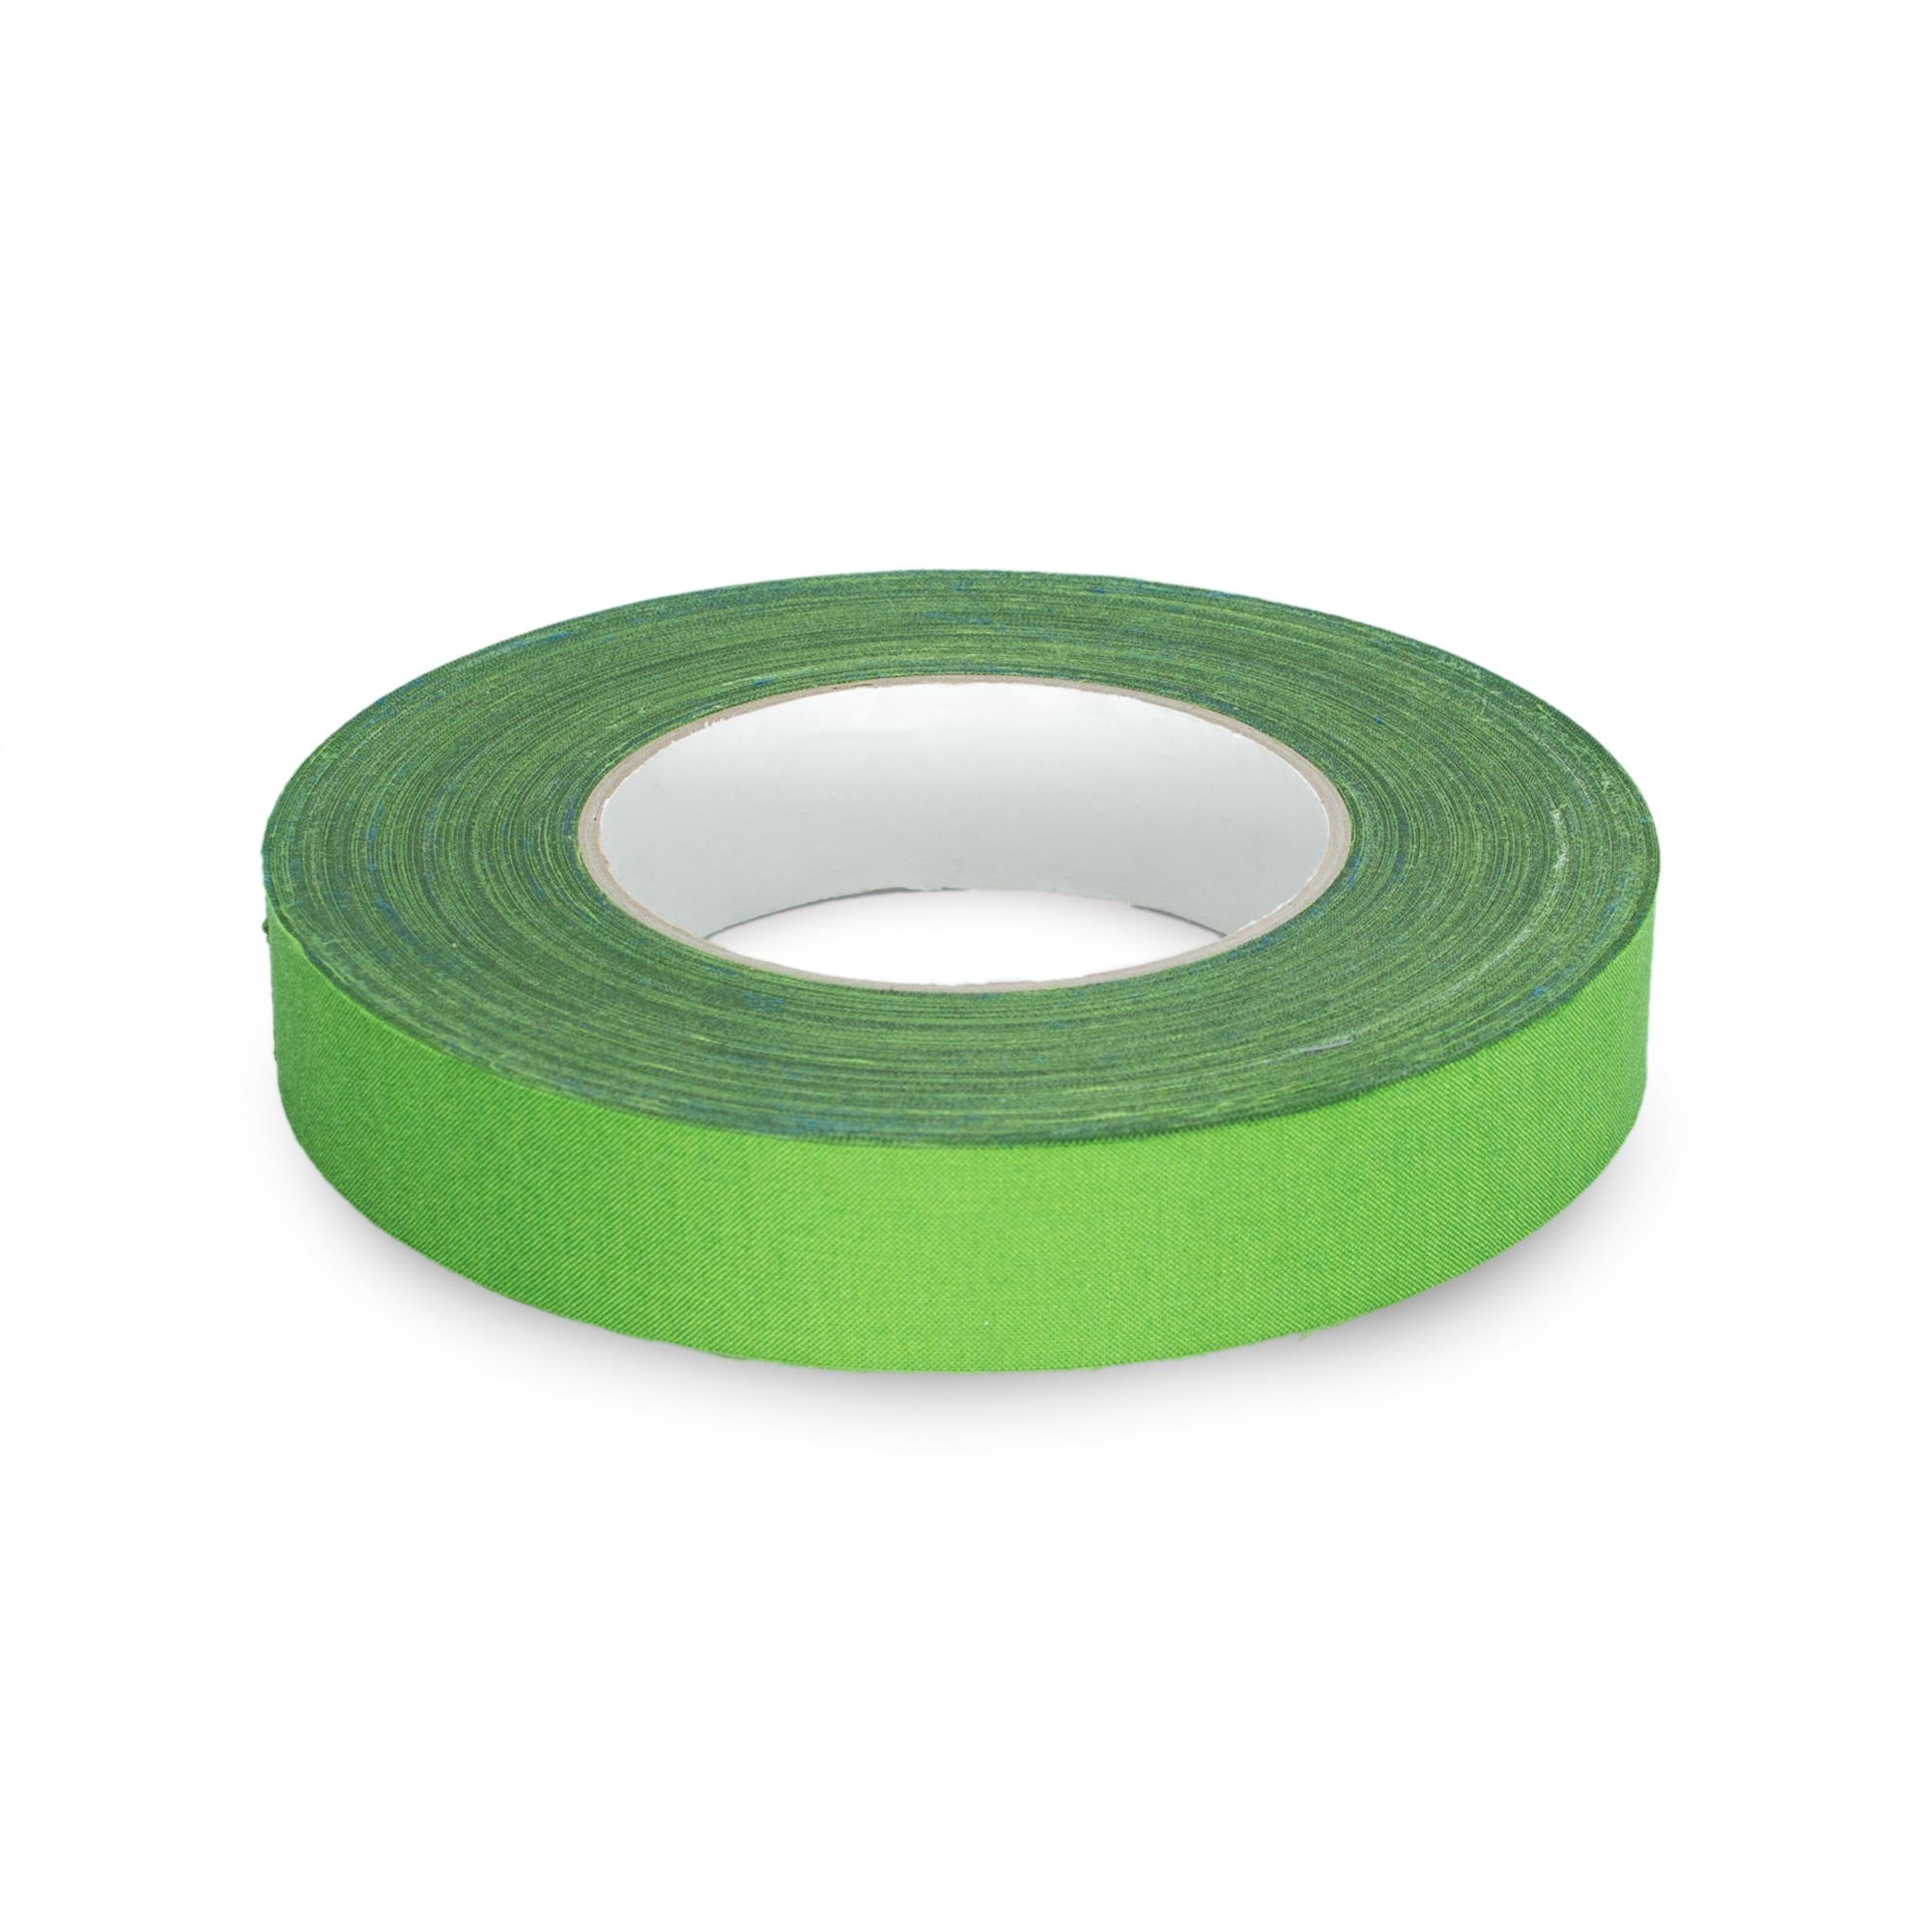 unpackaged green 2.5cm wide tape